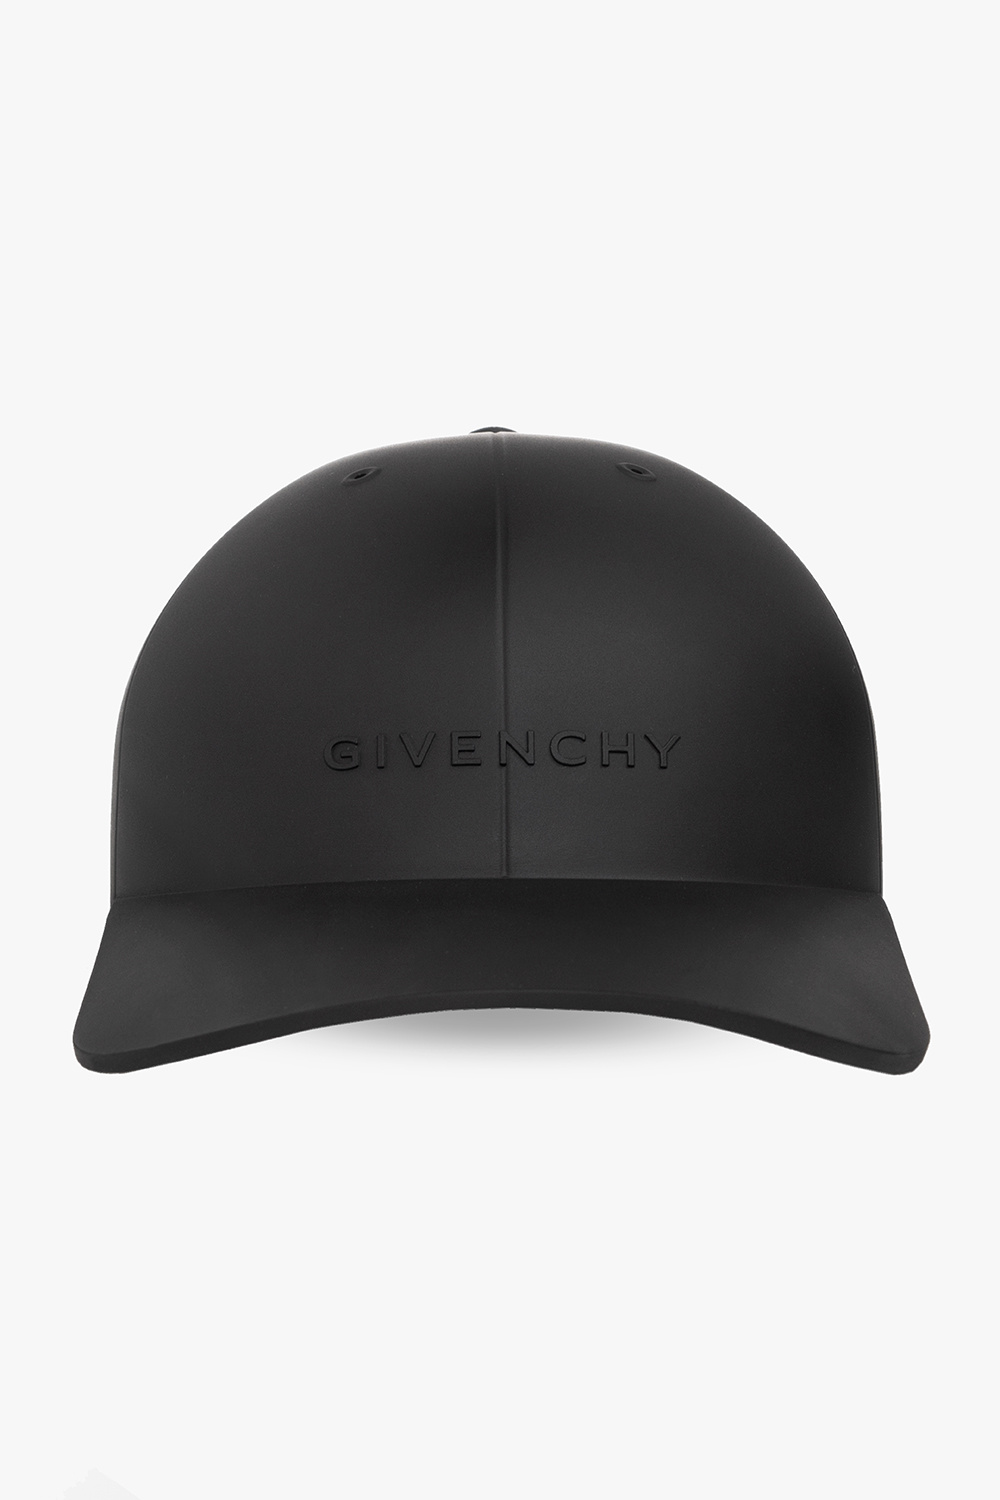 Givenchy Rubber baseball cap